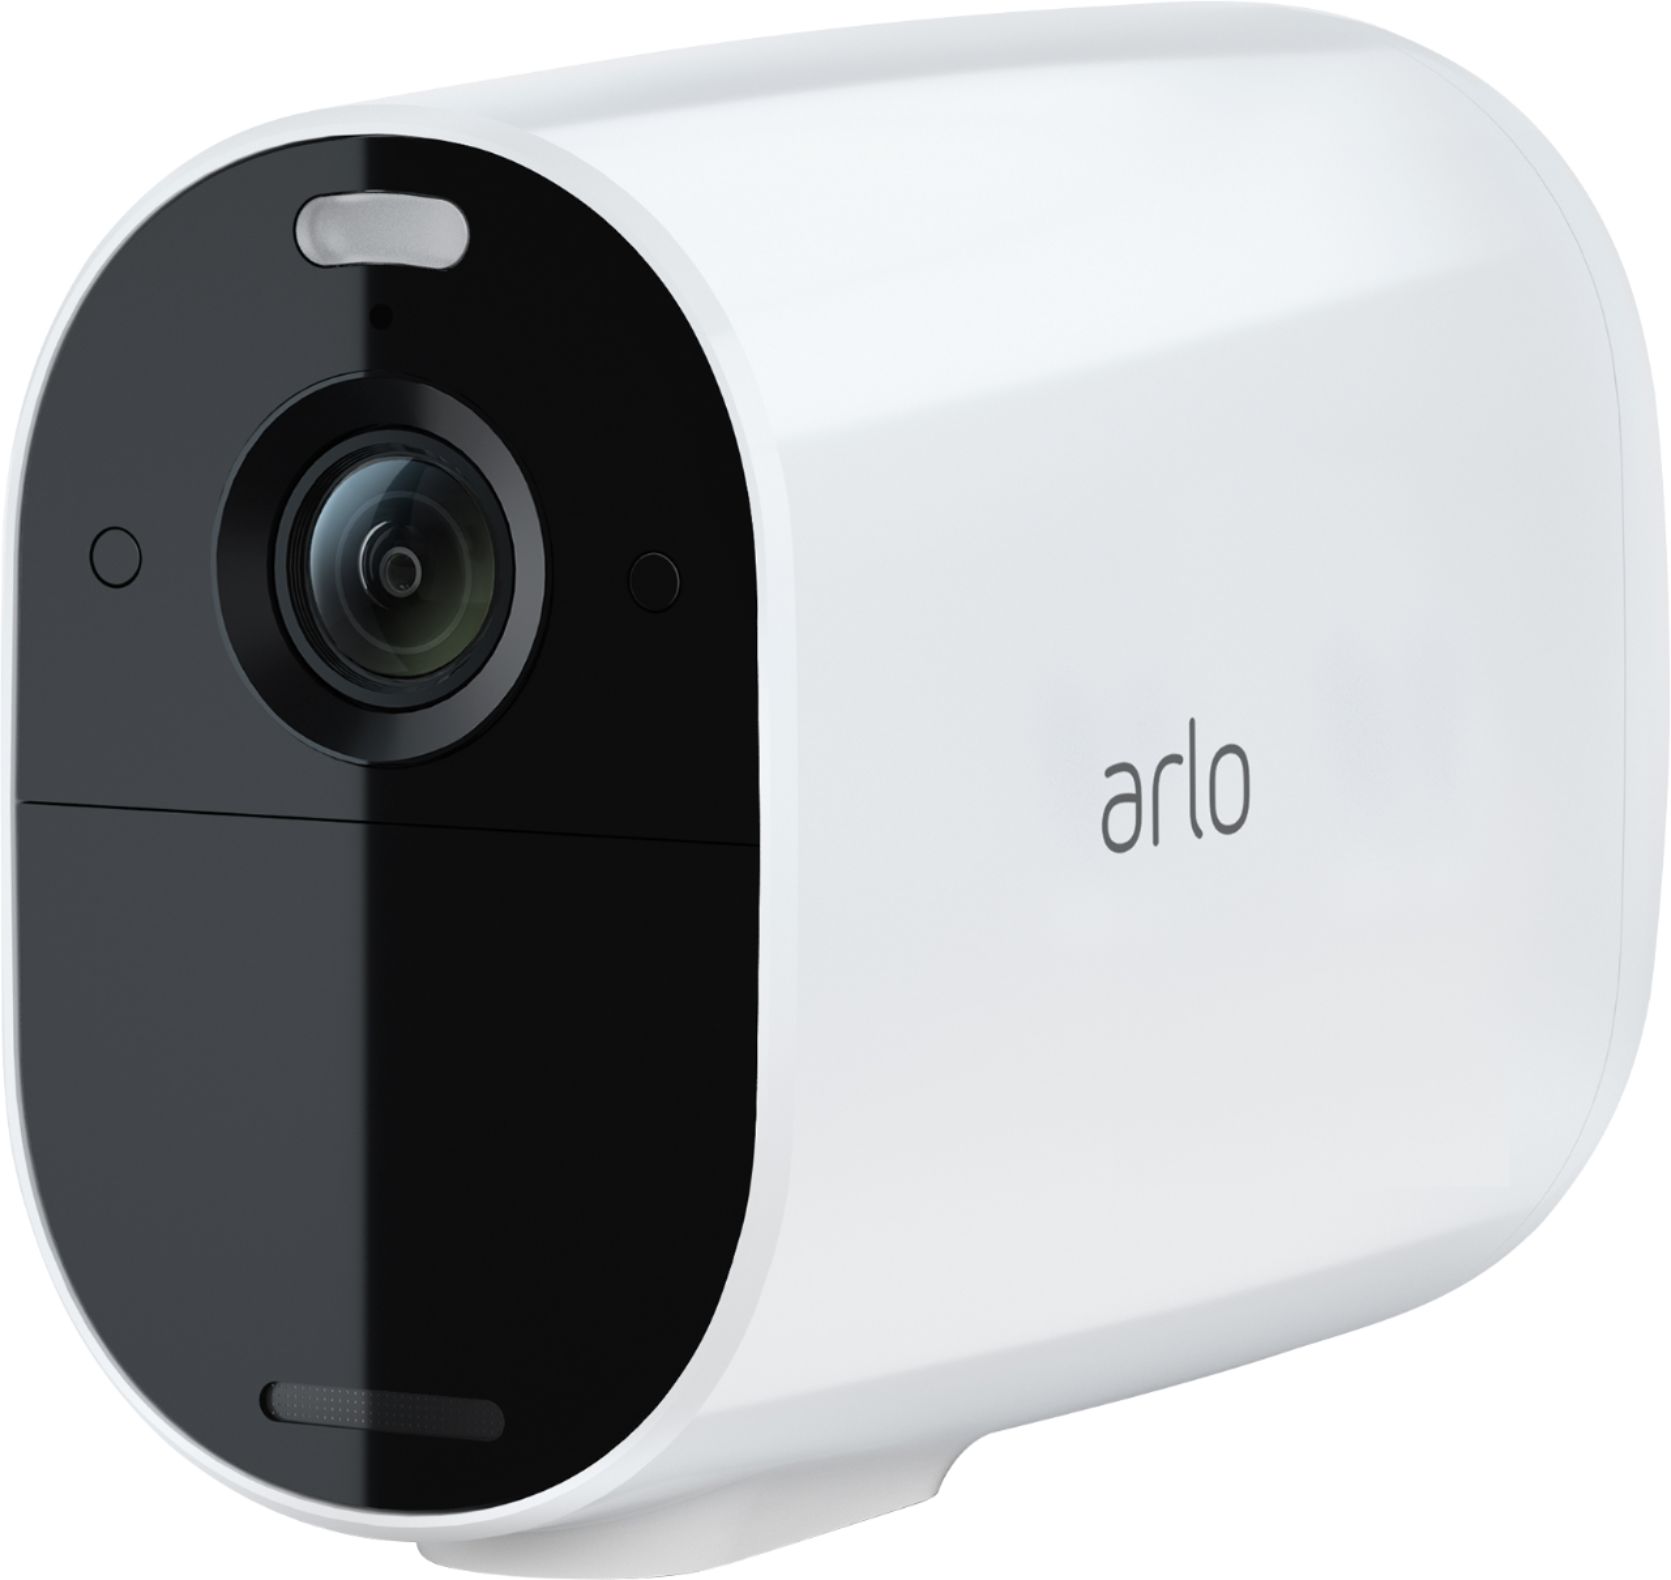 Arlo Essential Security Camera Bundle Review 